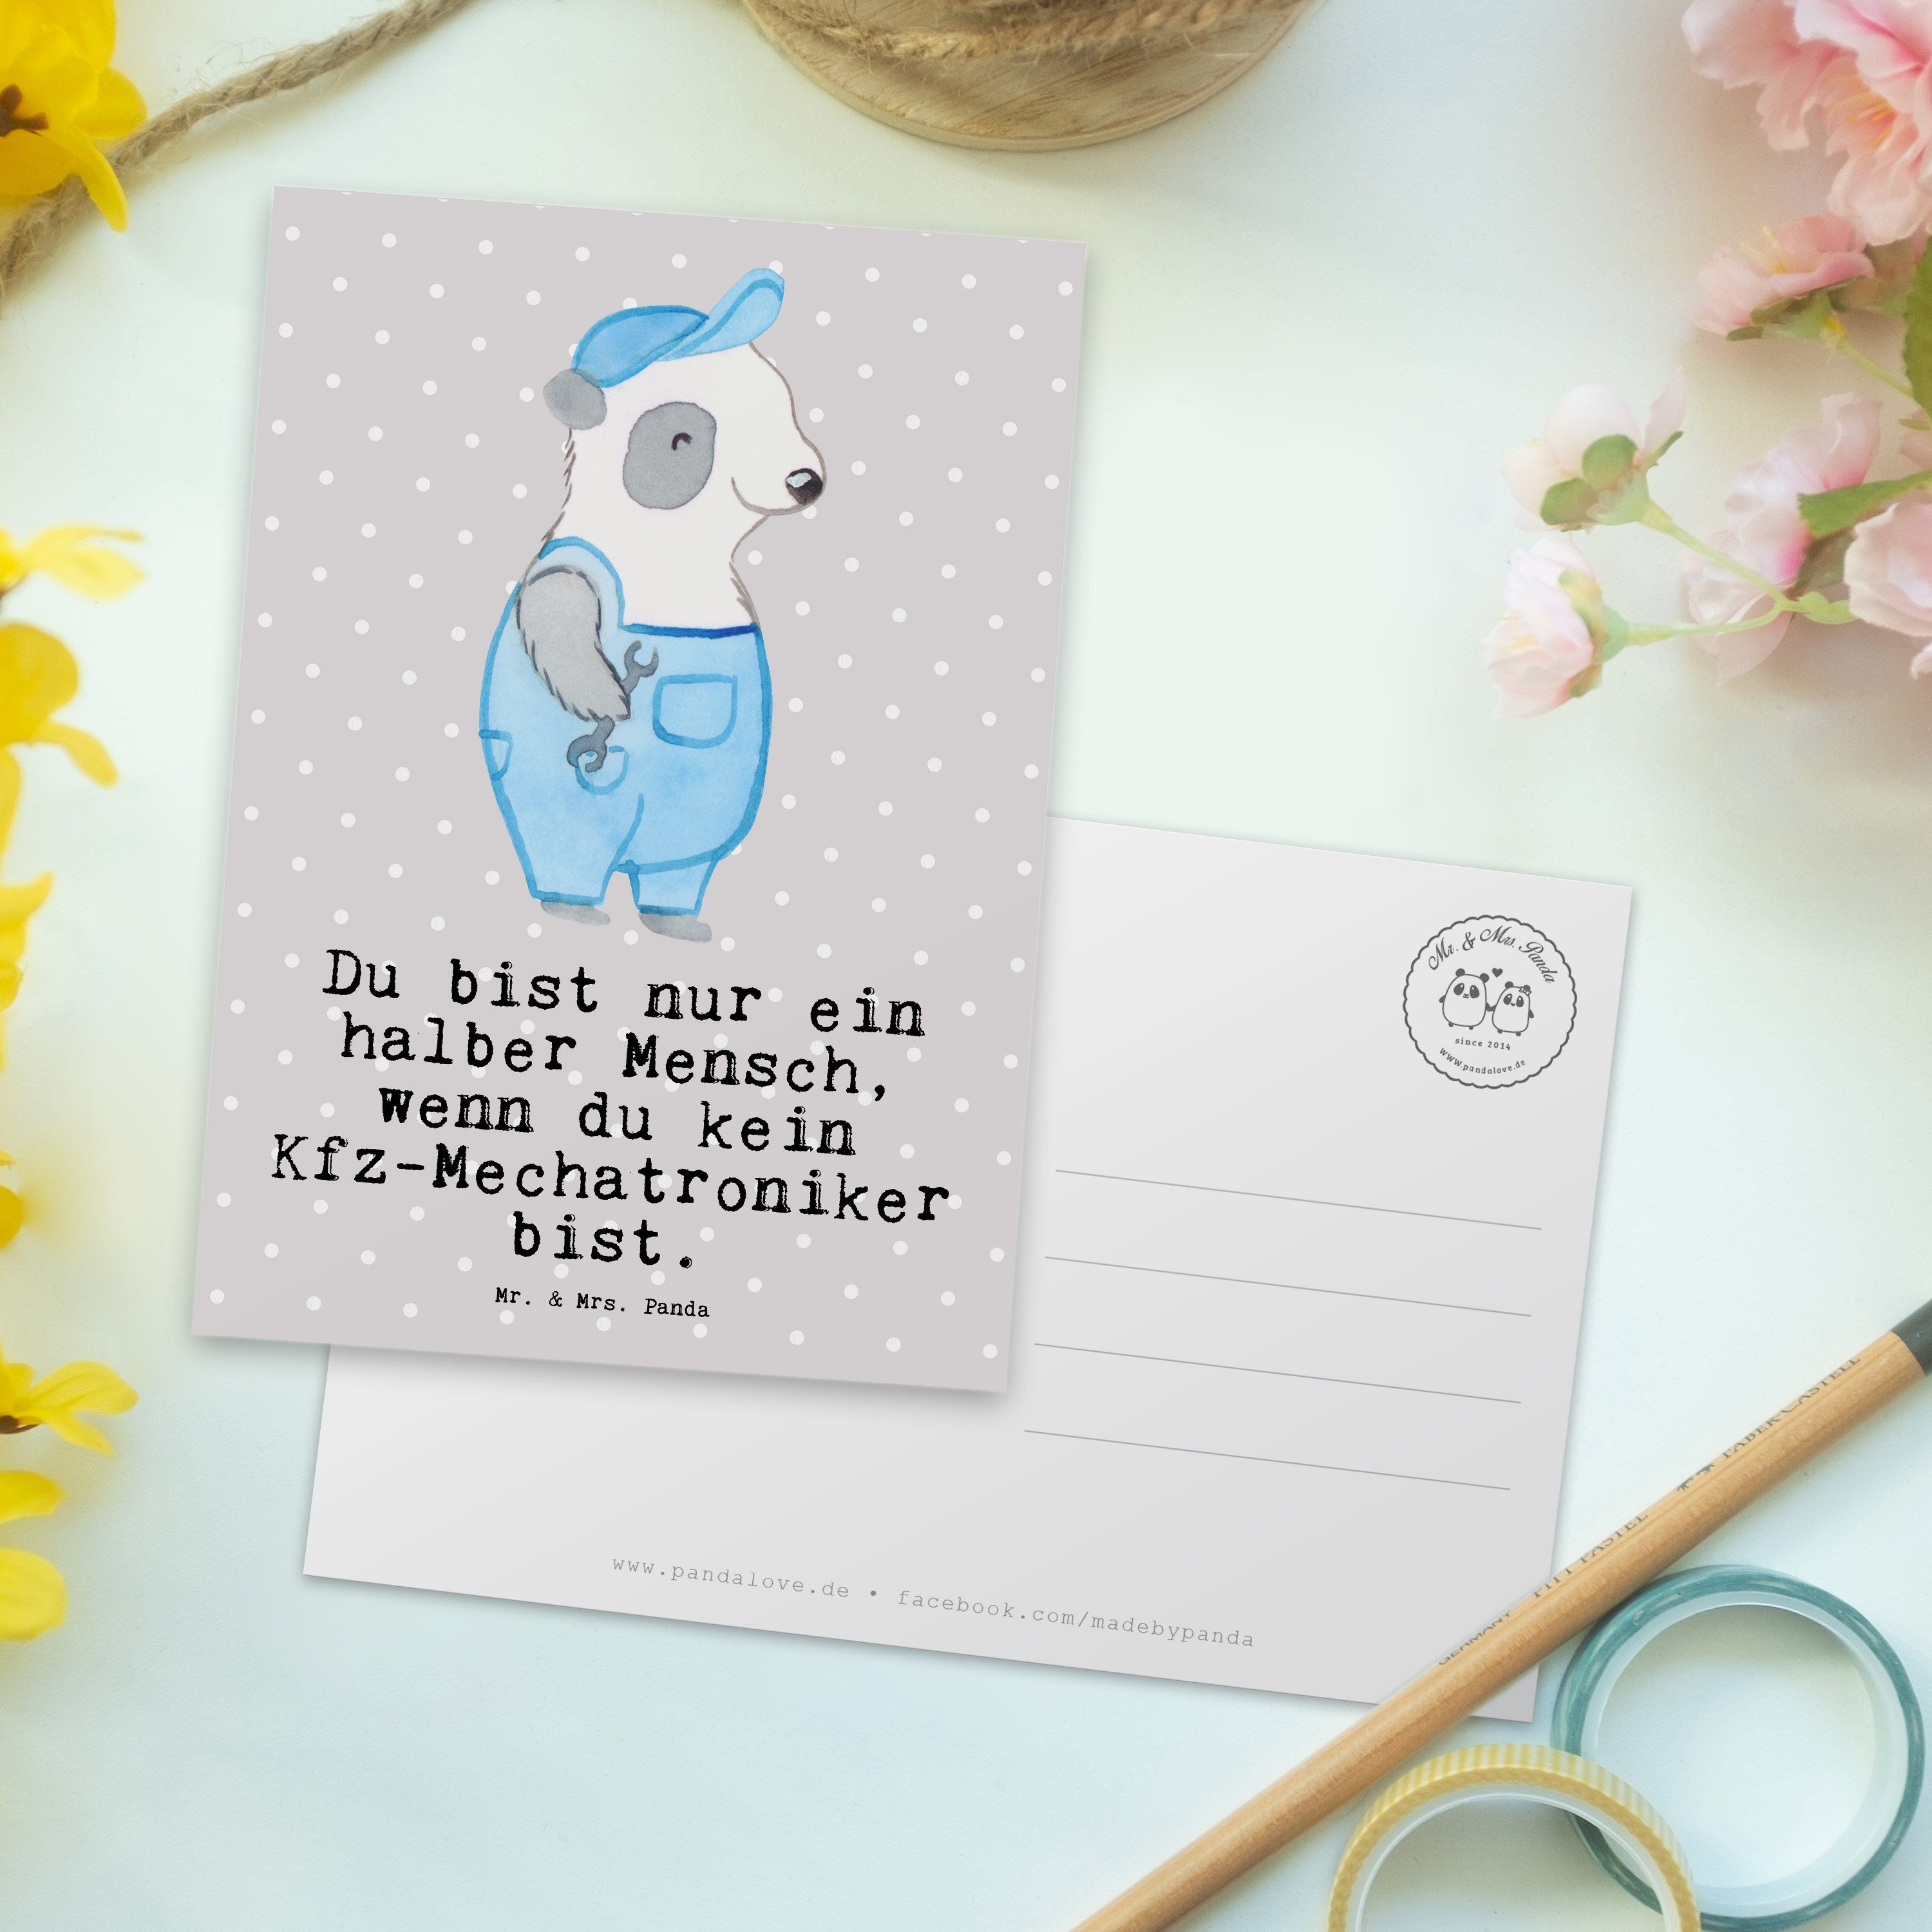 Mr. & Mrs. Panda Postkarte Kfz-Mechatroniker mit Herz - Grau Pastell - Geschenk, Dankeskarte, Me